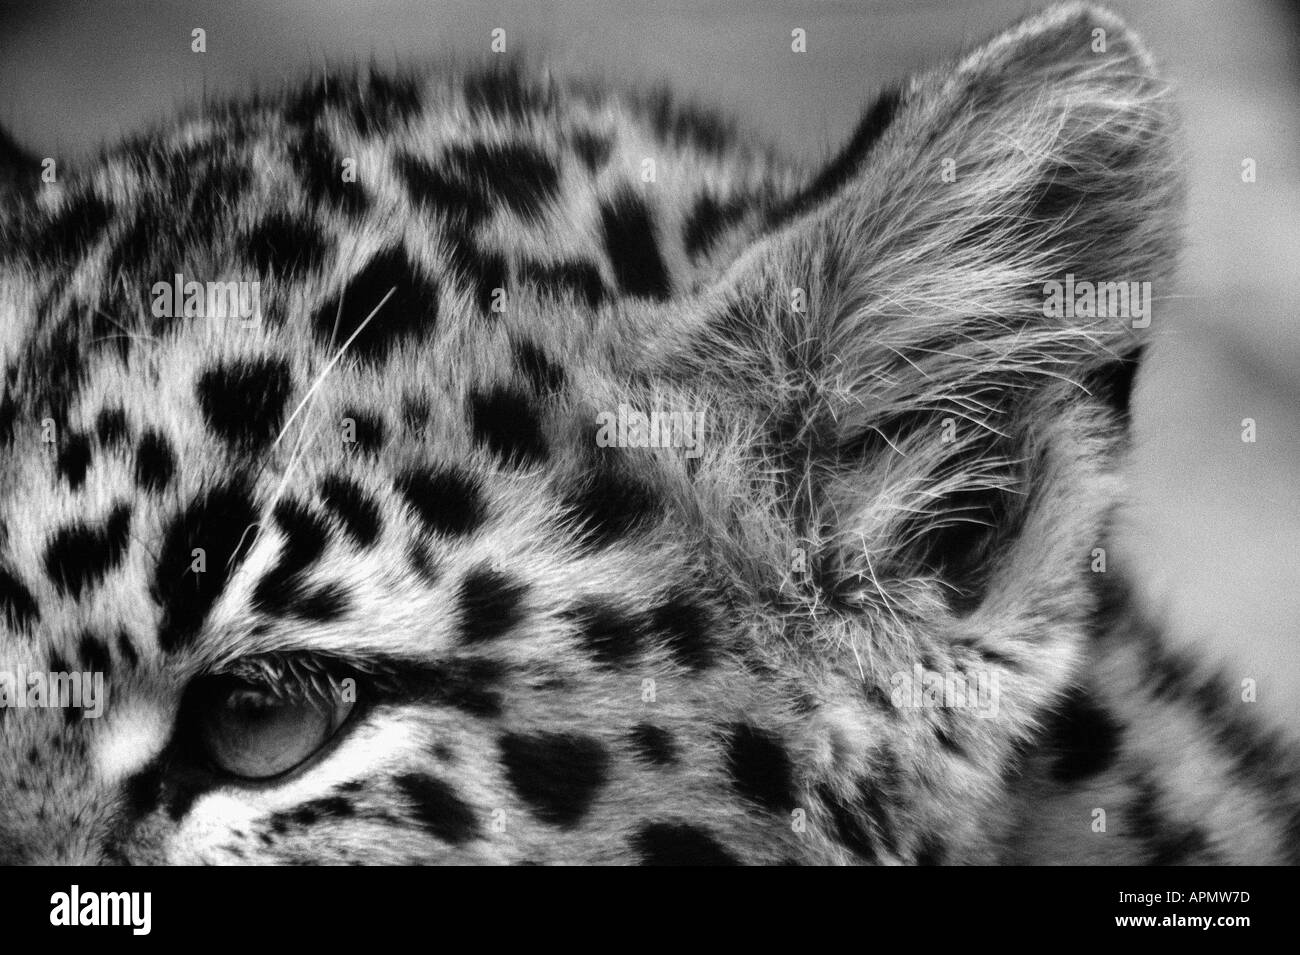 Cheetah anatomy Black and White Stock Photos & Images - Alamy